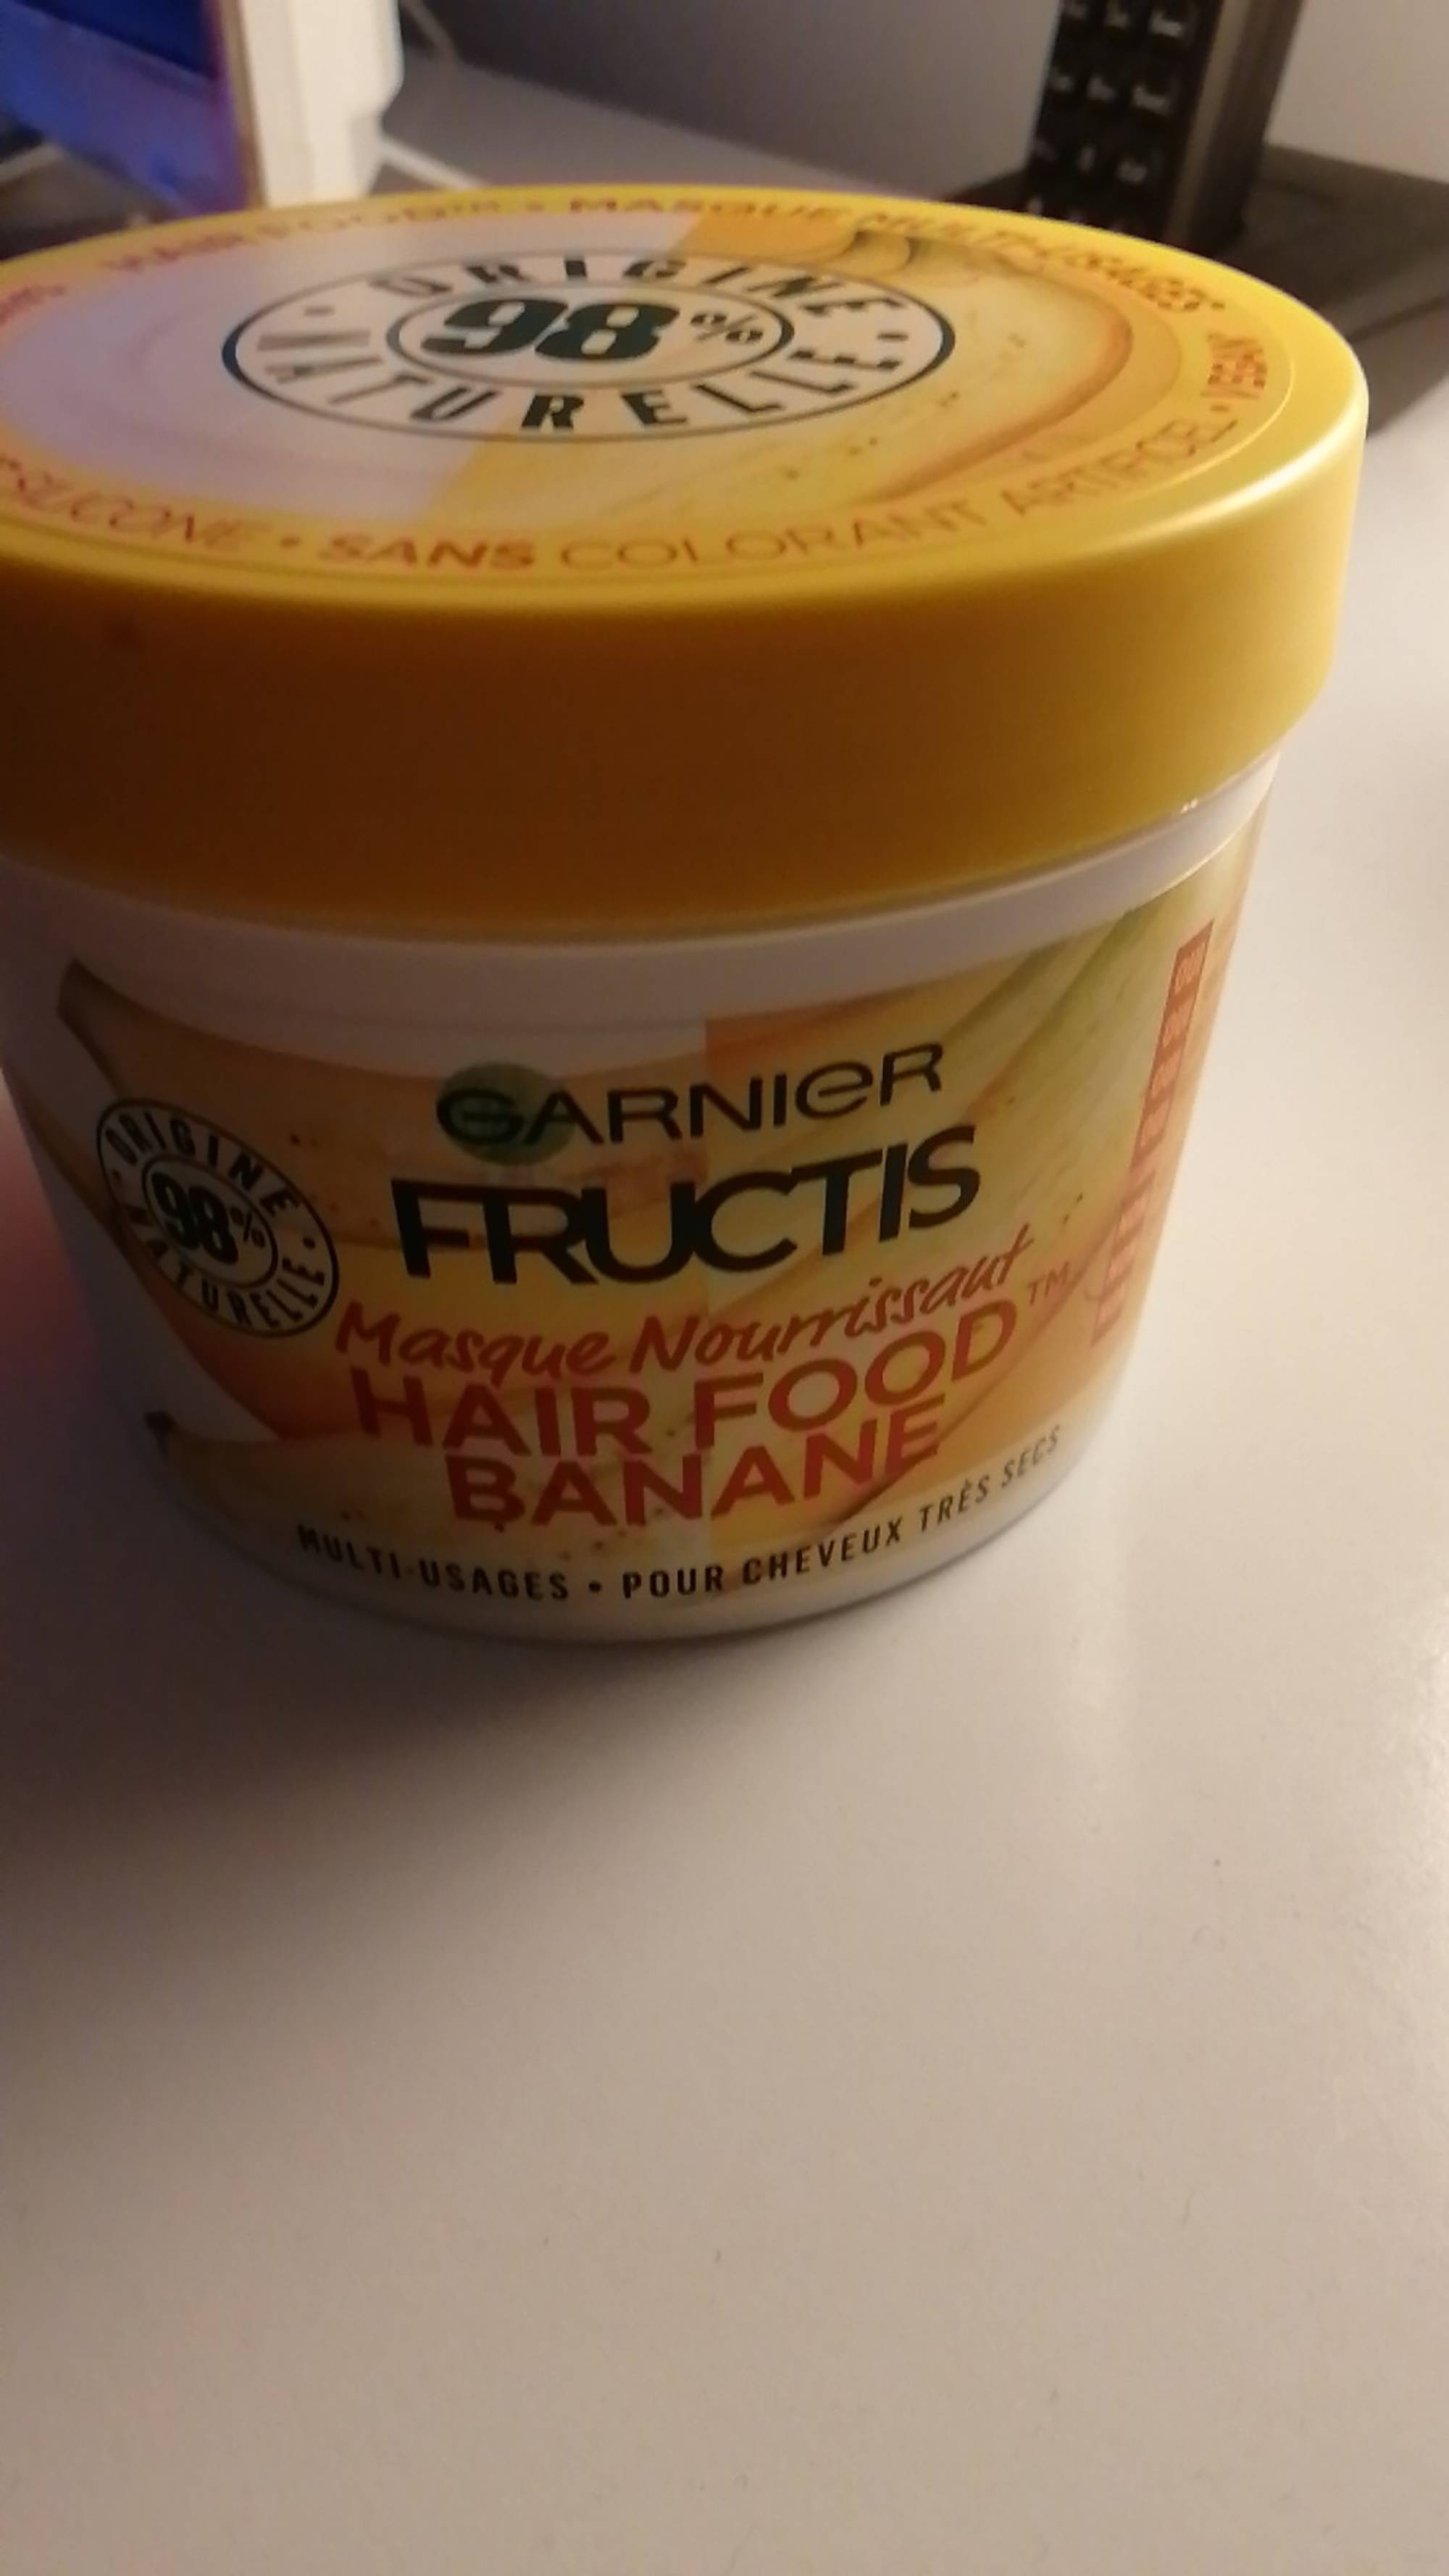 GARNIER - Fructis hair food - Masque nourissant banane